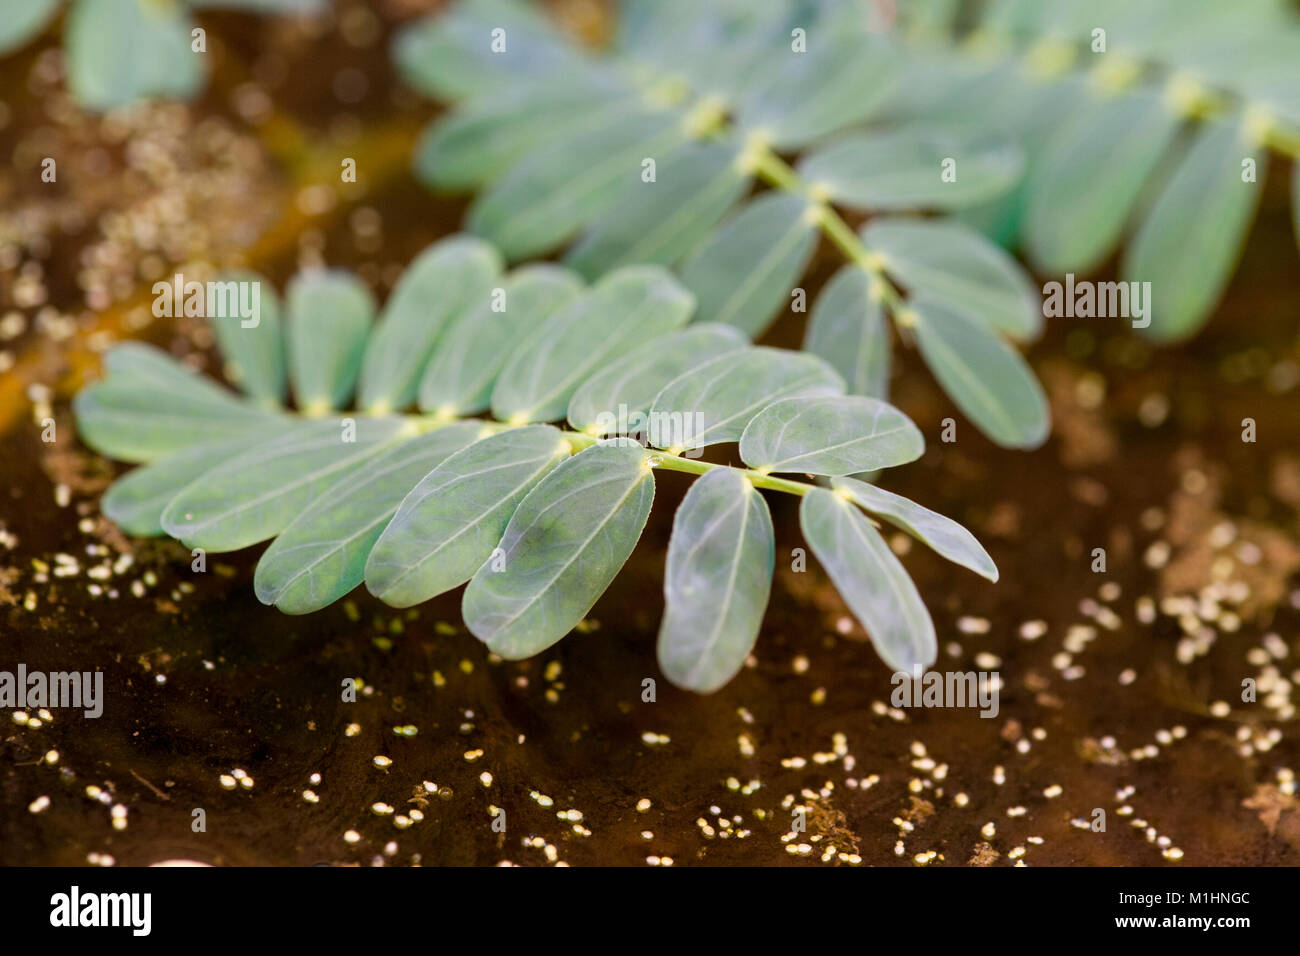 Aeschynomene fluitans,Wassermimose,Giant sensitive fern Stock Photo